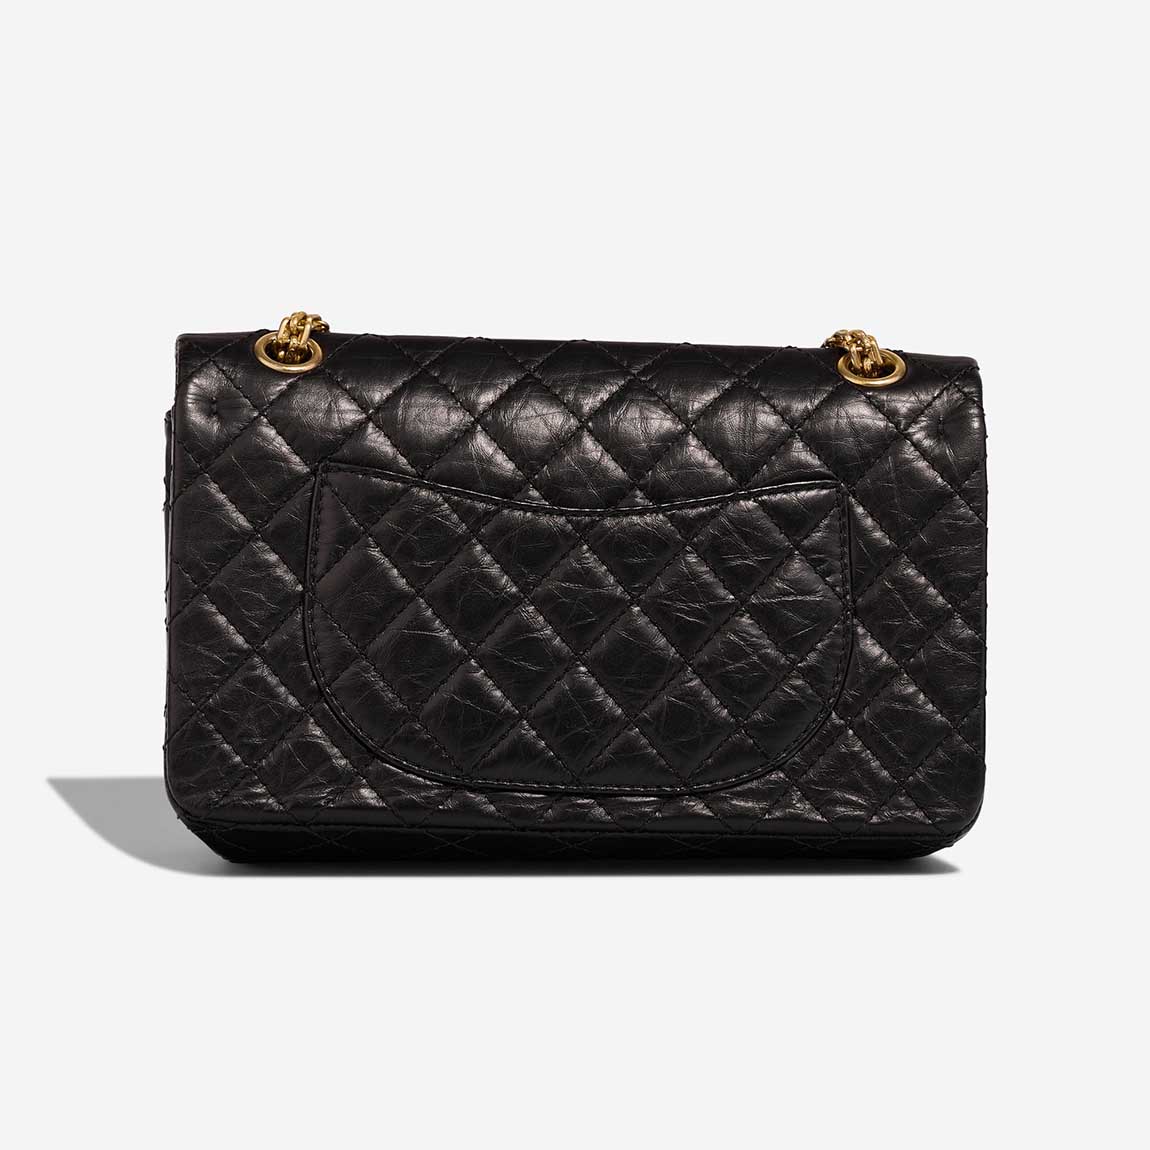 Chanel 2.55 Reissue 225 Aged Calf Black | Sell your designer bag